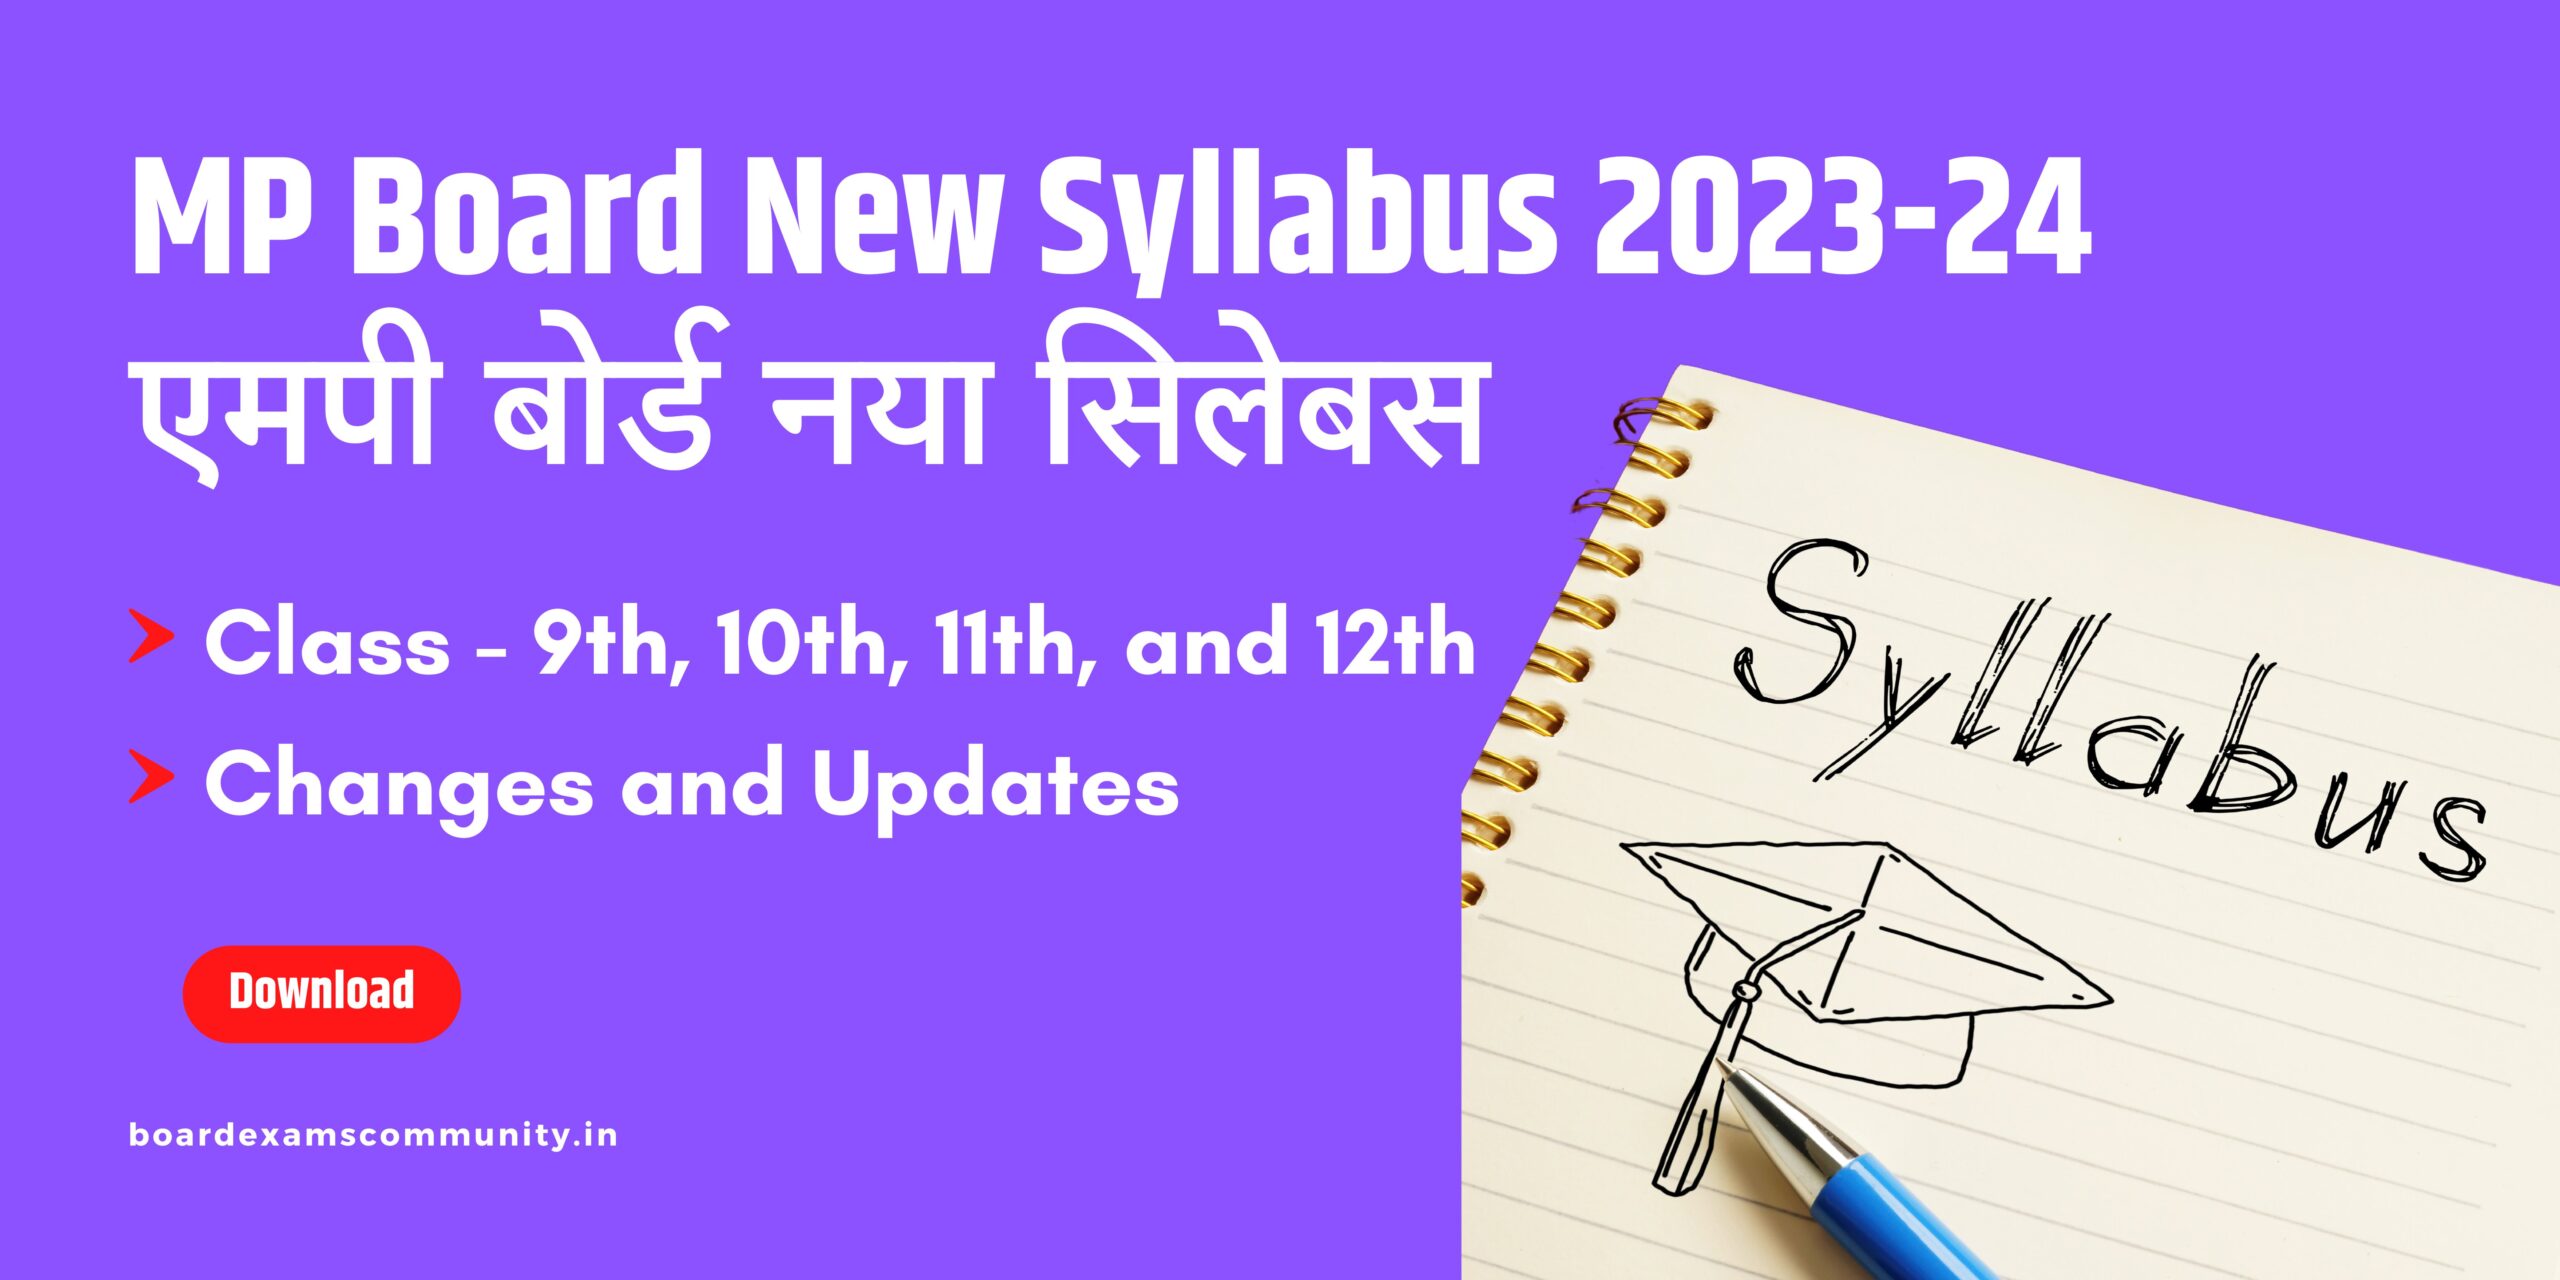 MP Board reduced syllabus 2023-24